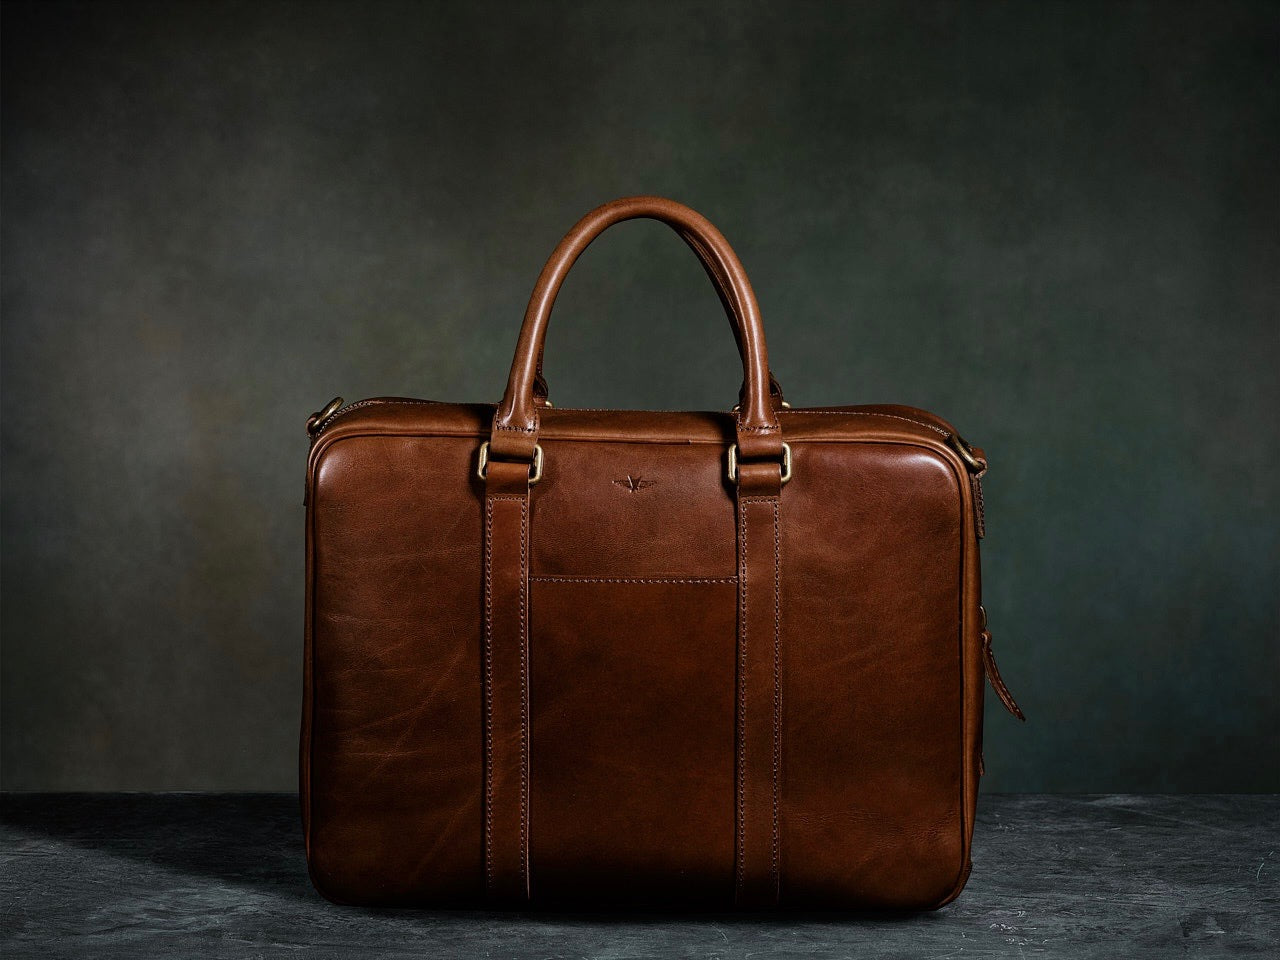 Maxwell Scott Bags - Tan Quality Italian Leather Overnight Bag